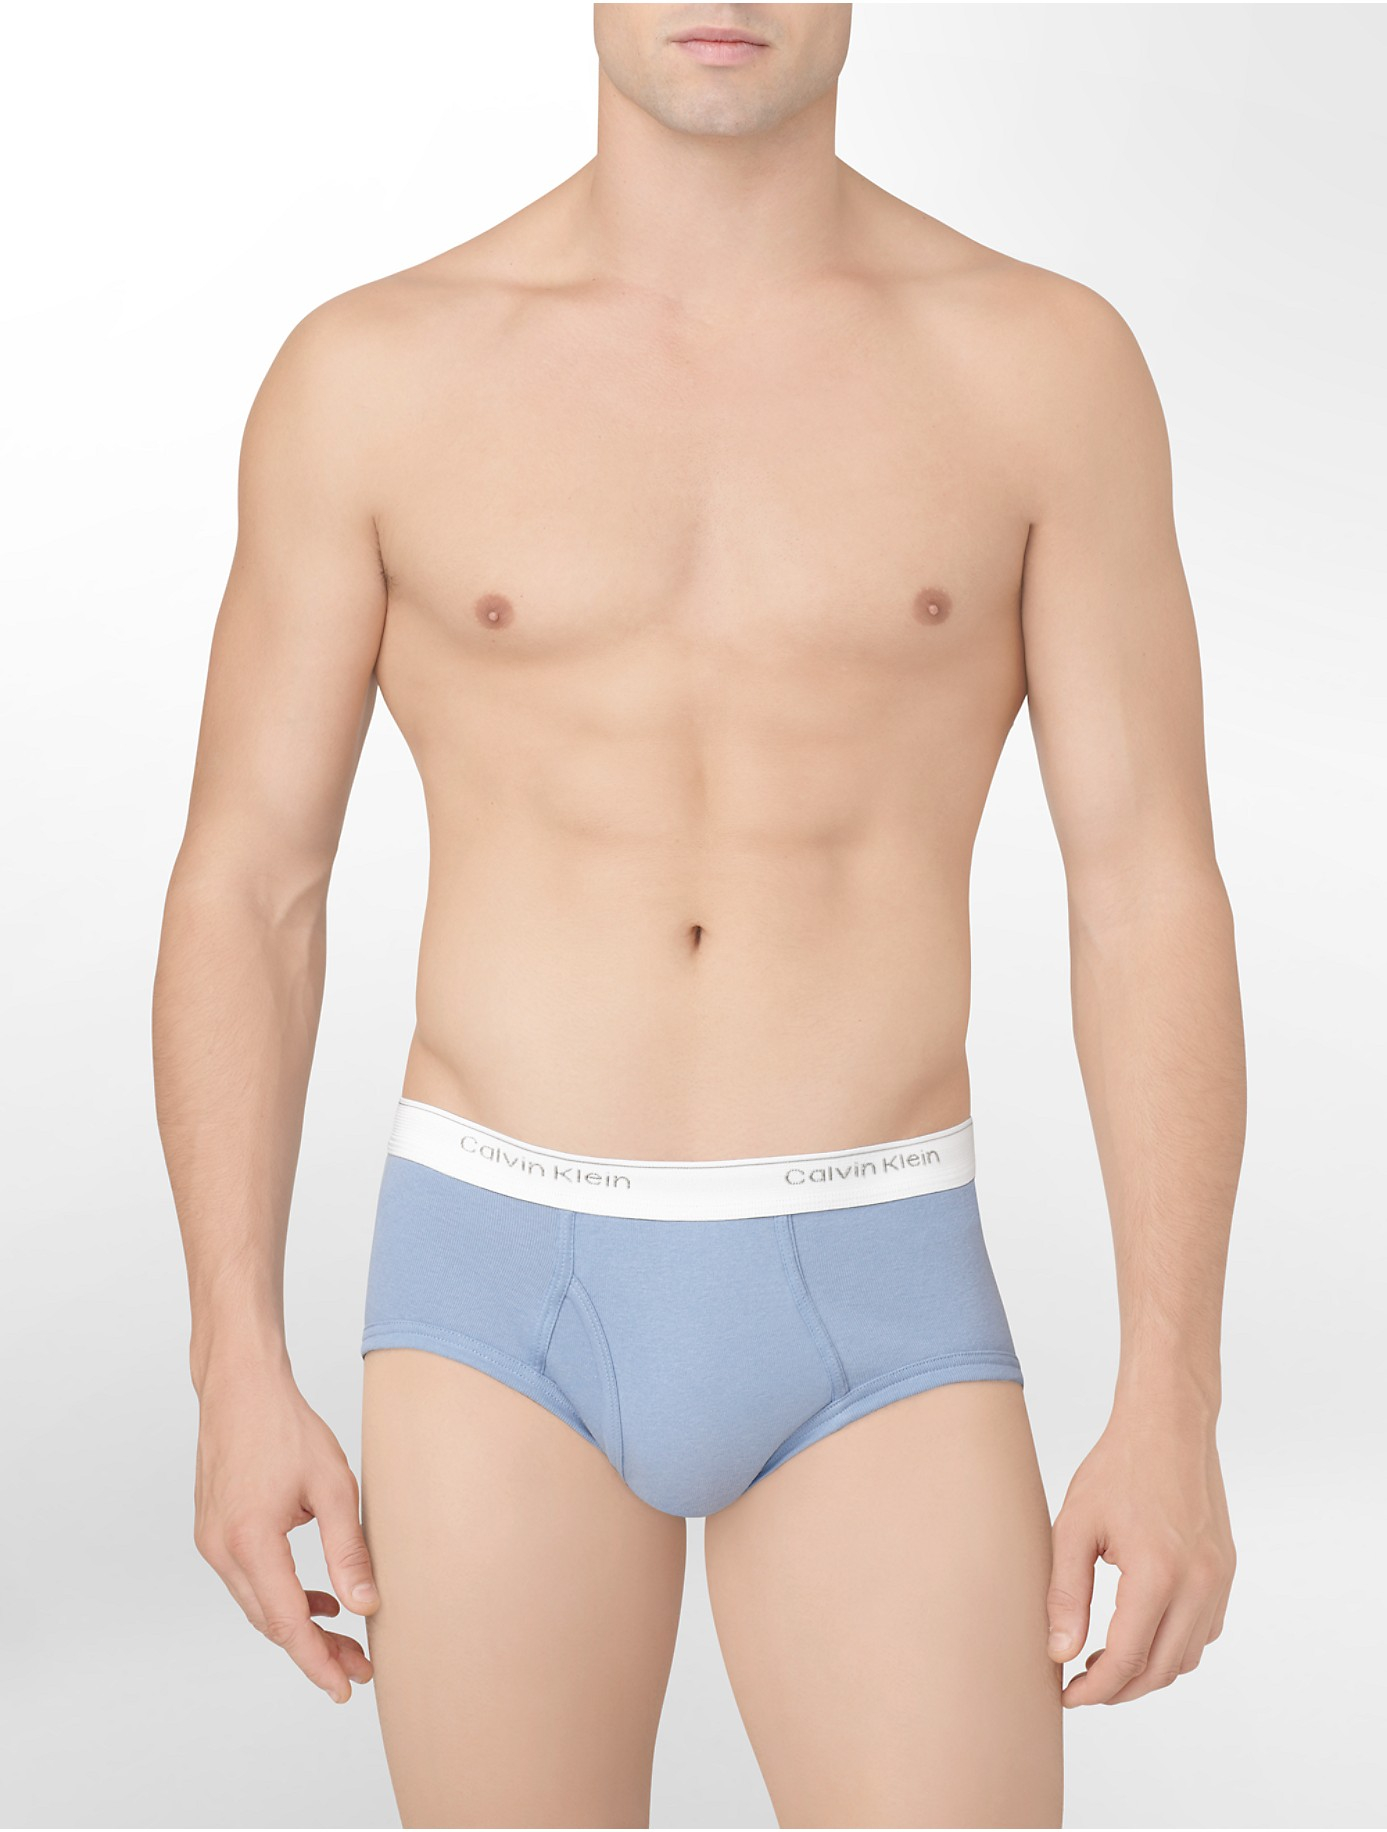 https://cdna.lystit.com/photos/d9af-2015/03/17/calvin-klein-blue-underwear-classics-3-pack-brief-product-0-328485161-normal.jpeg